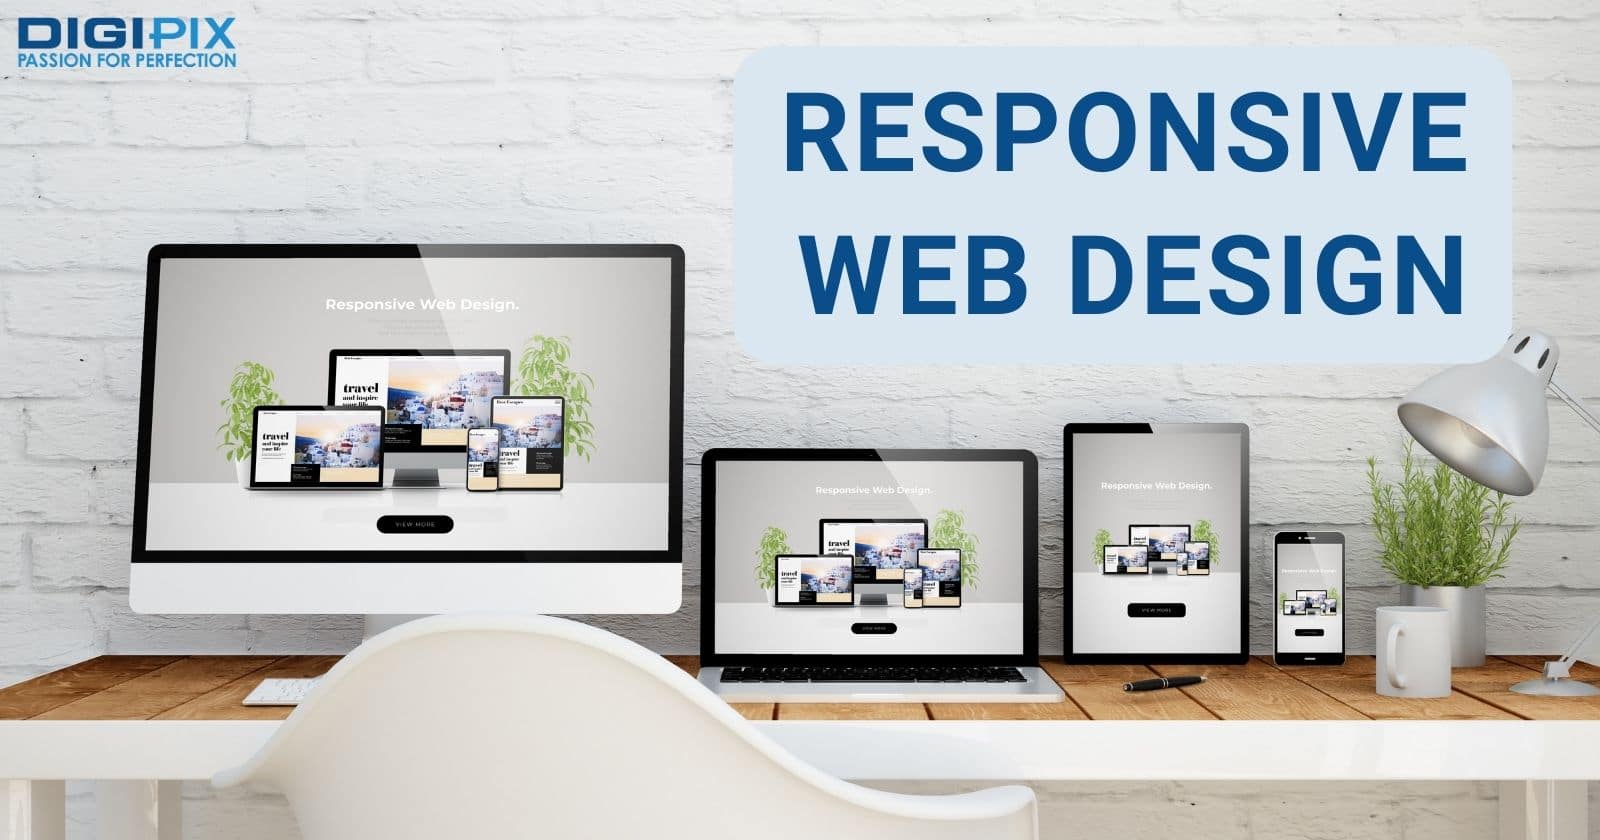 Responsive Web Design digipix digipixinc.com